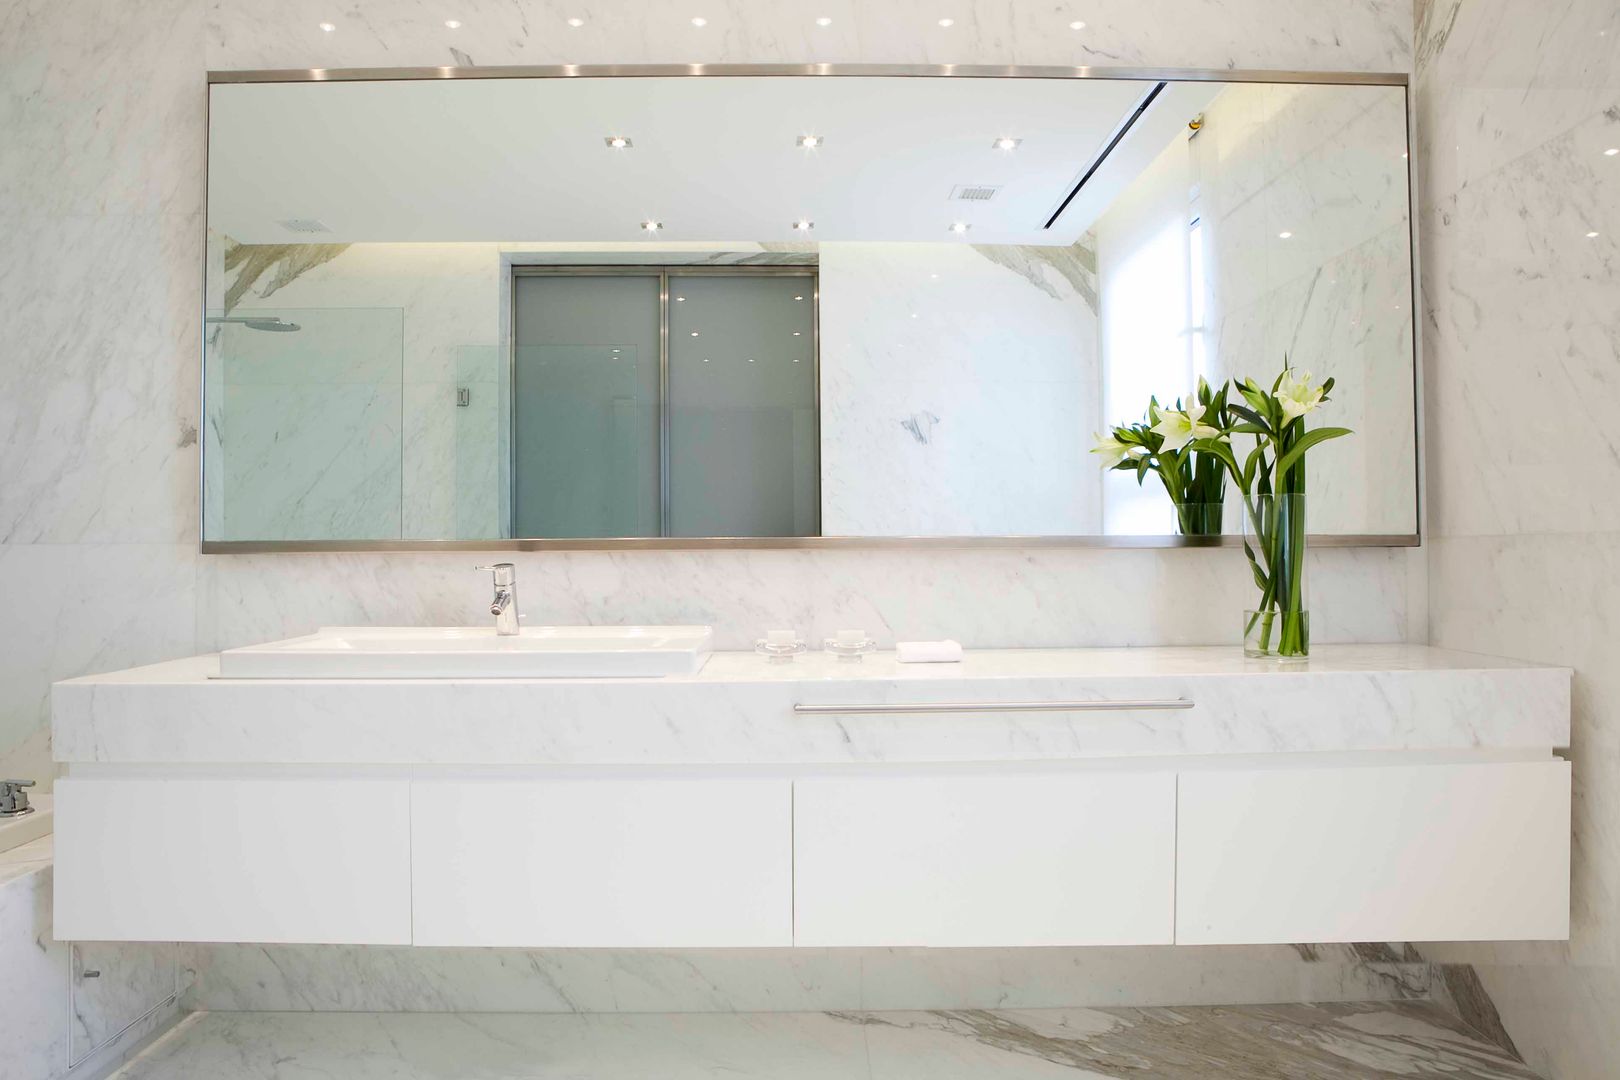 Baños by Brukman Chechik Arquitectos, LIVE IN LIVE IN Modern bathroom